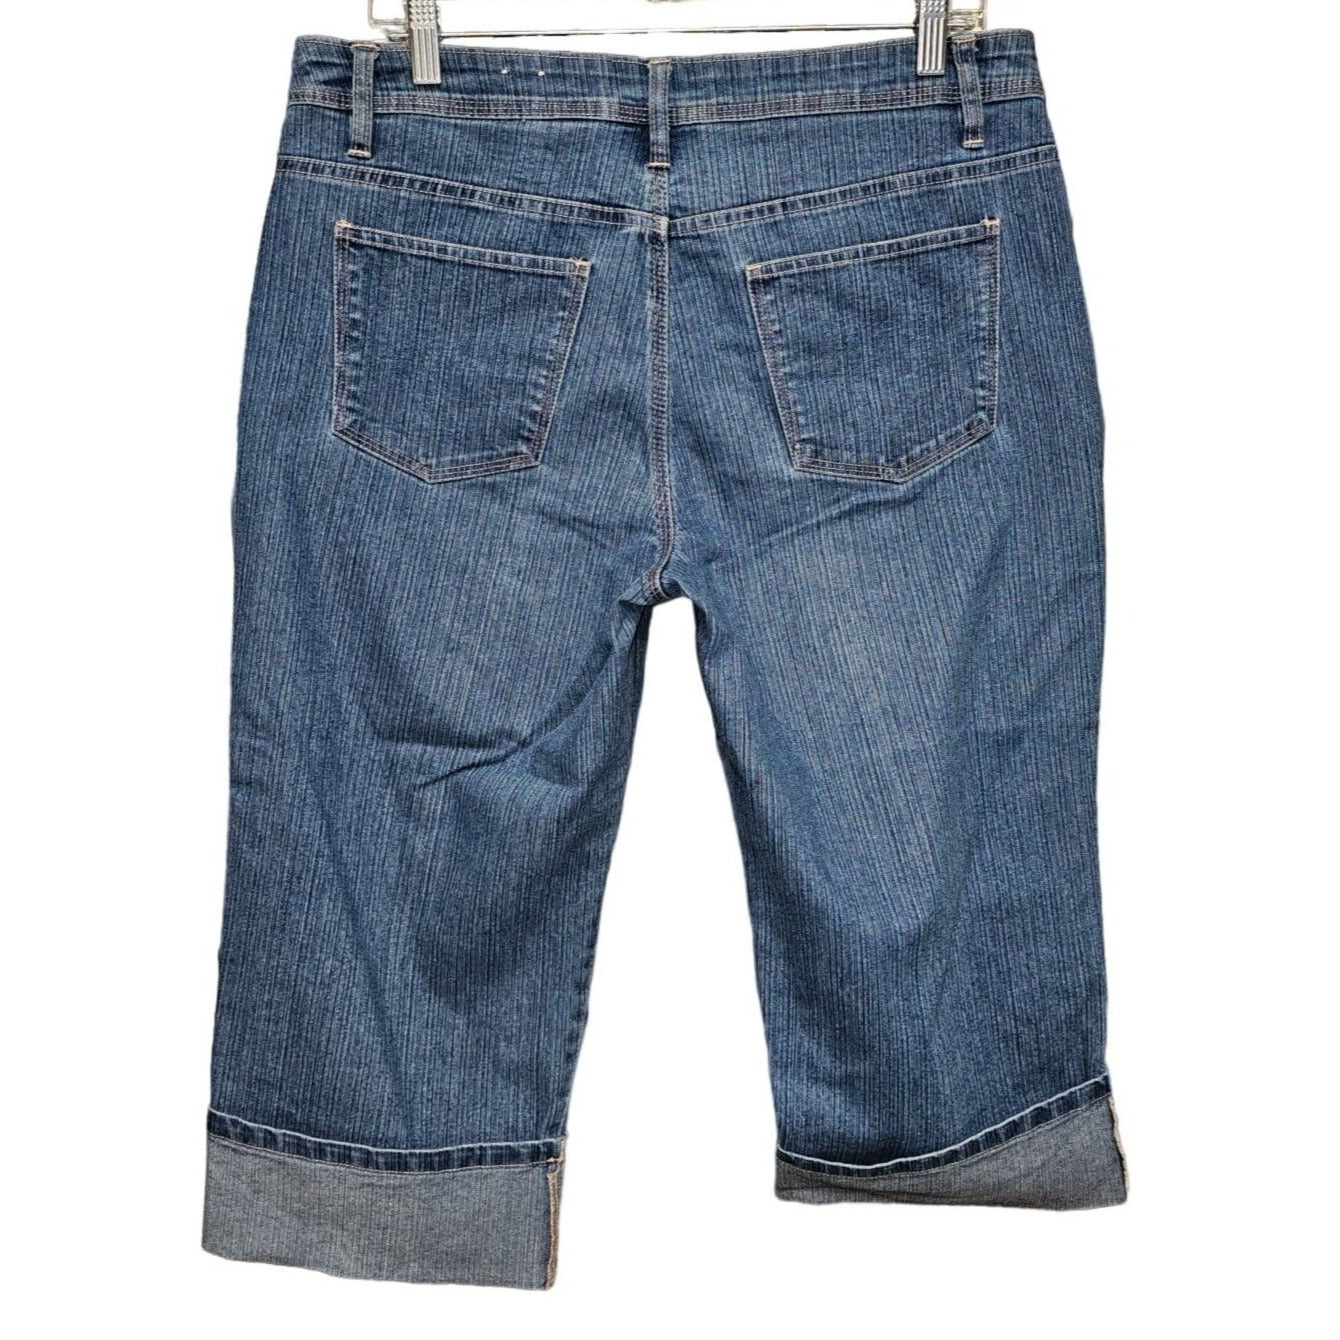 Bill Blass Boyfriend Style, Stretch, Cropped or Capris Jeans, Size 10 Petite